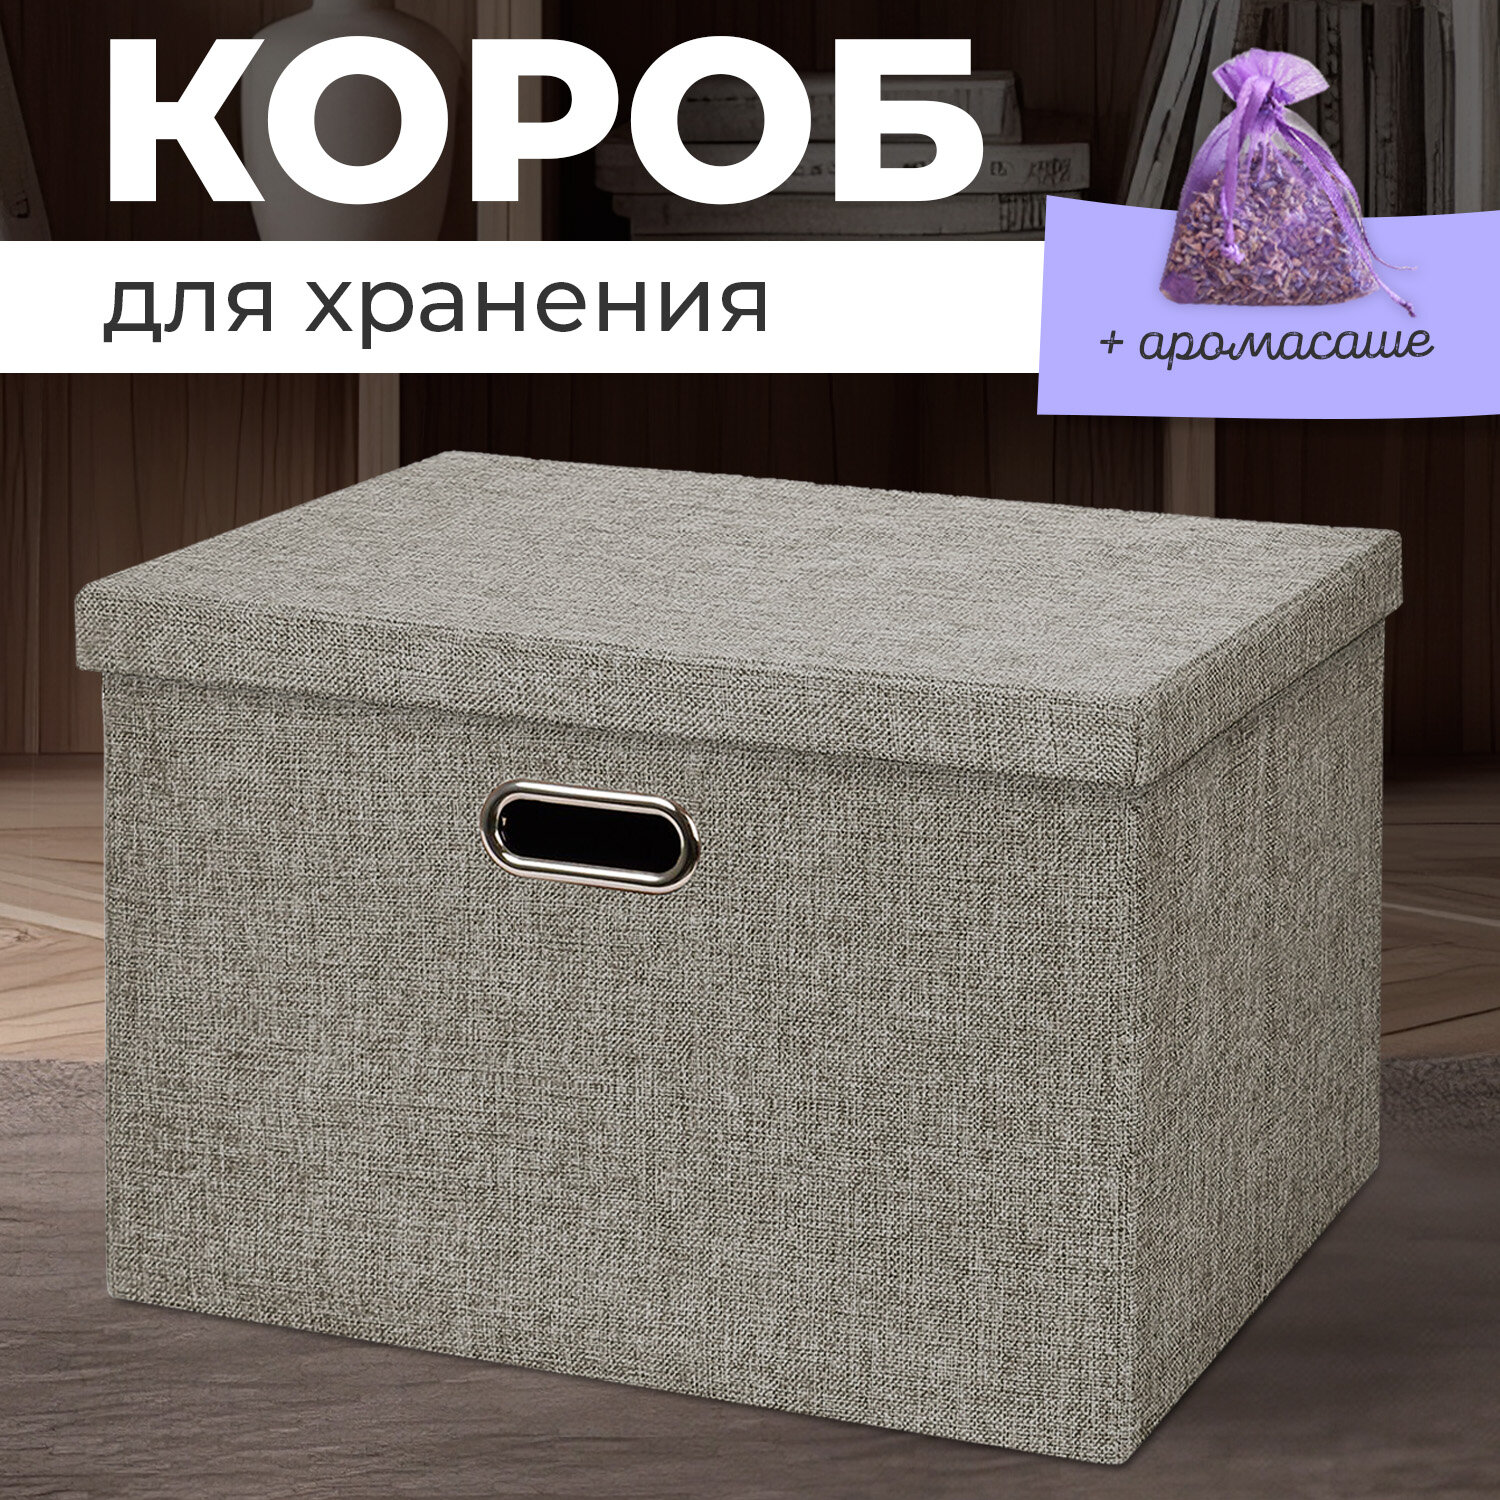 Коробка для хранения вещей, короб для хранения стеллажный, корзина, ящик, 44*30*29 см